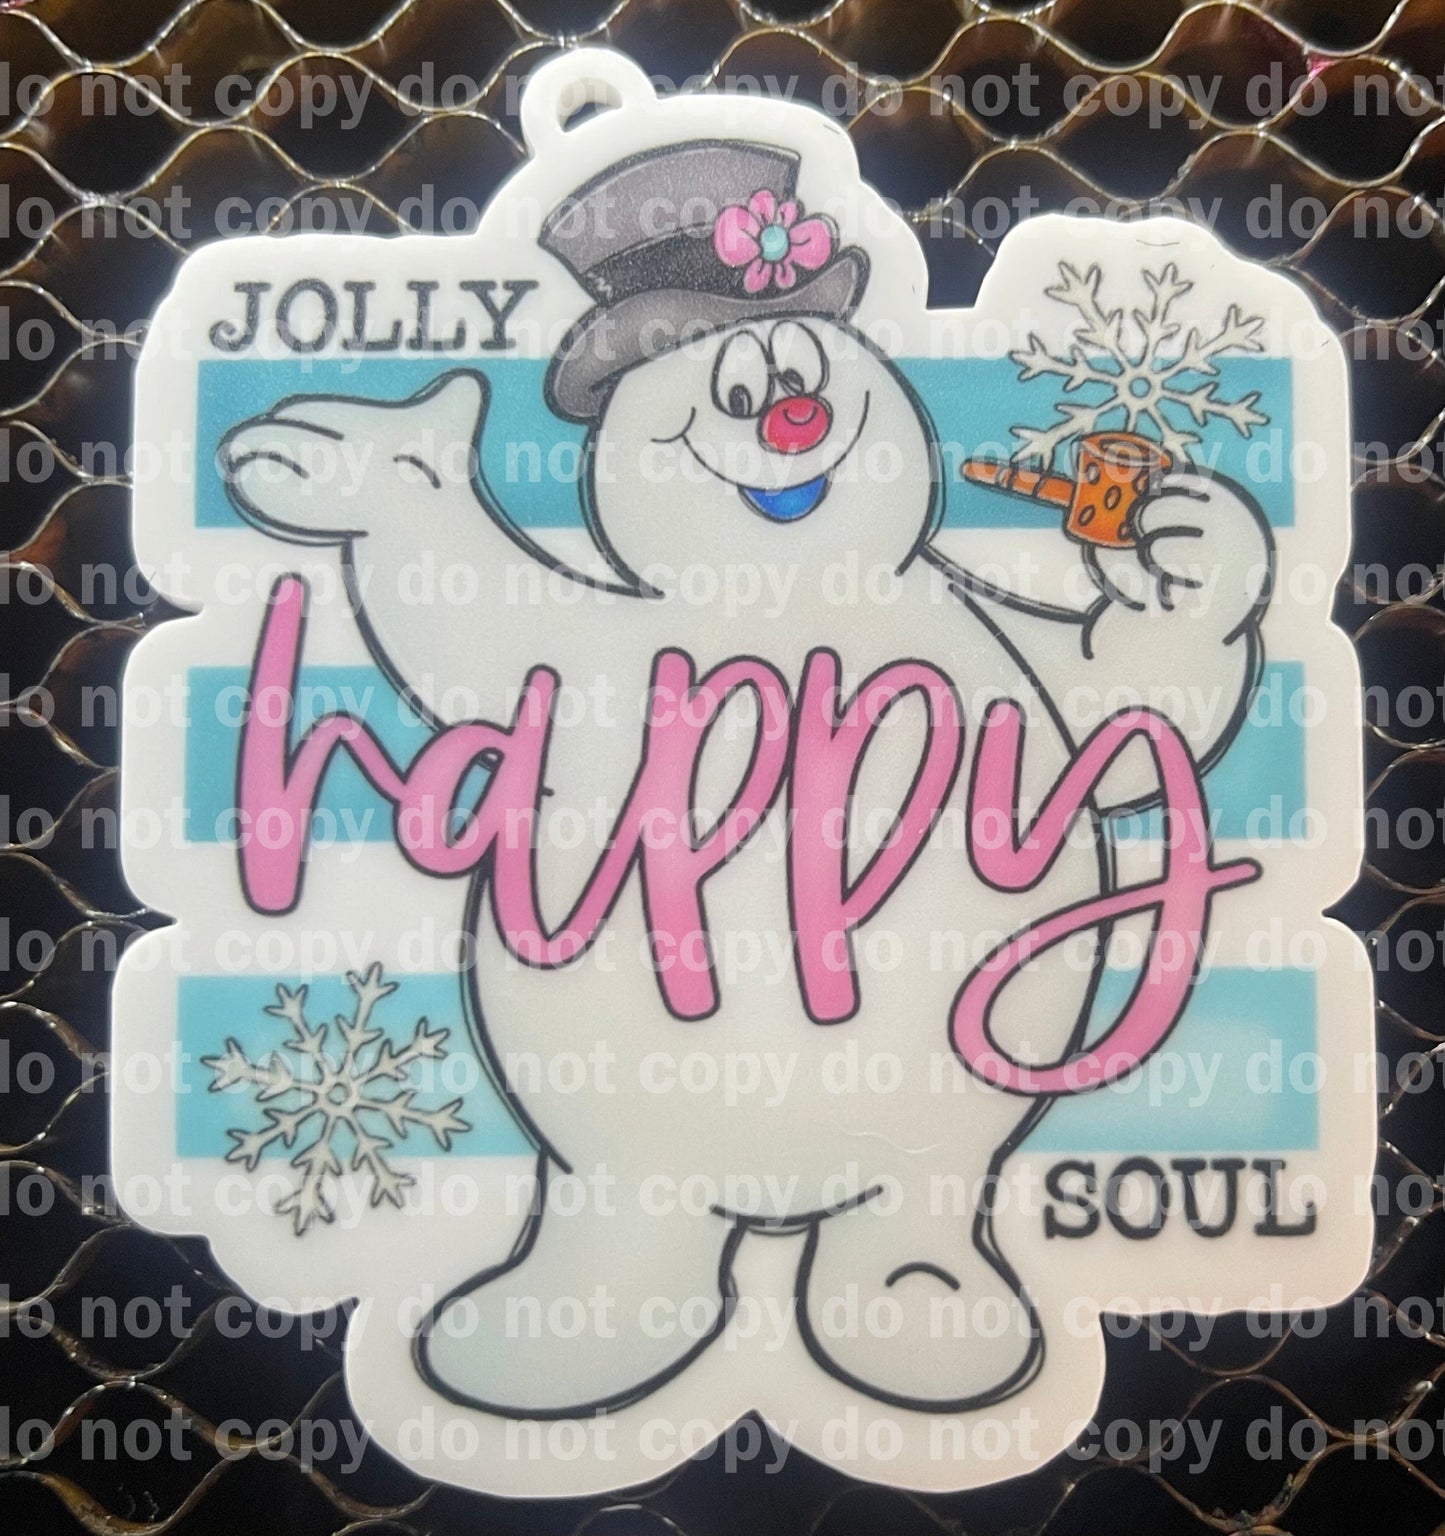 Jolly Happy Soul snowman Christmas ornament uv print and acrylic